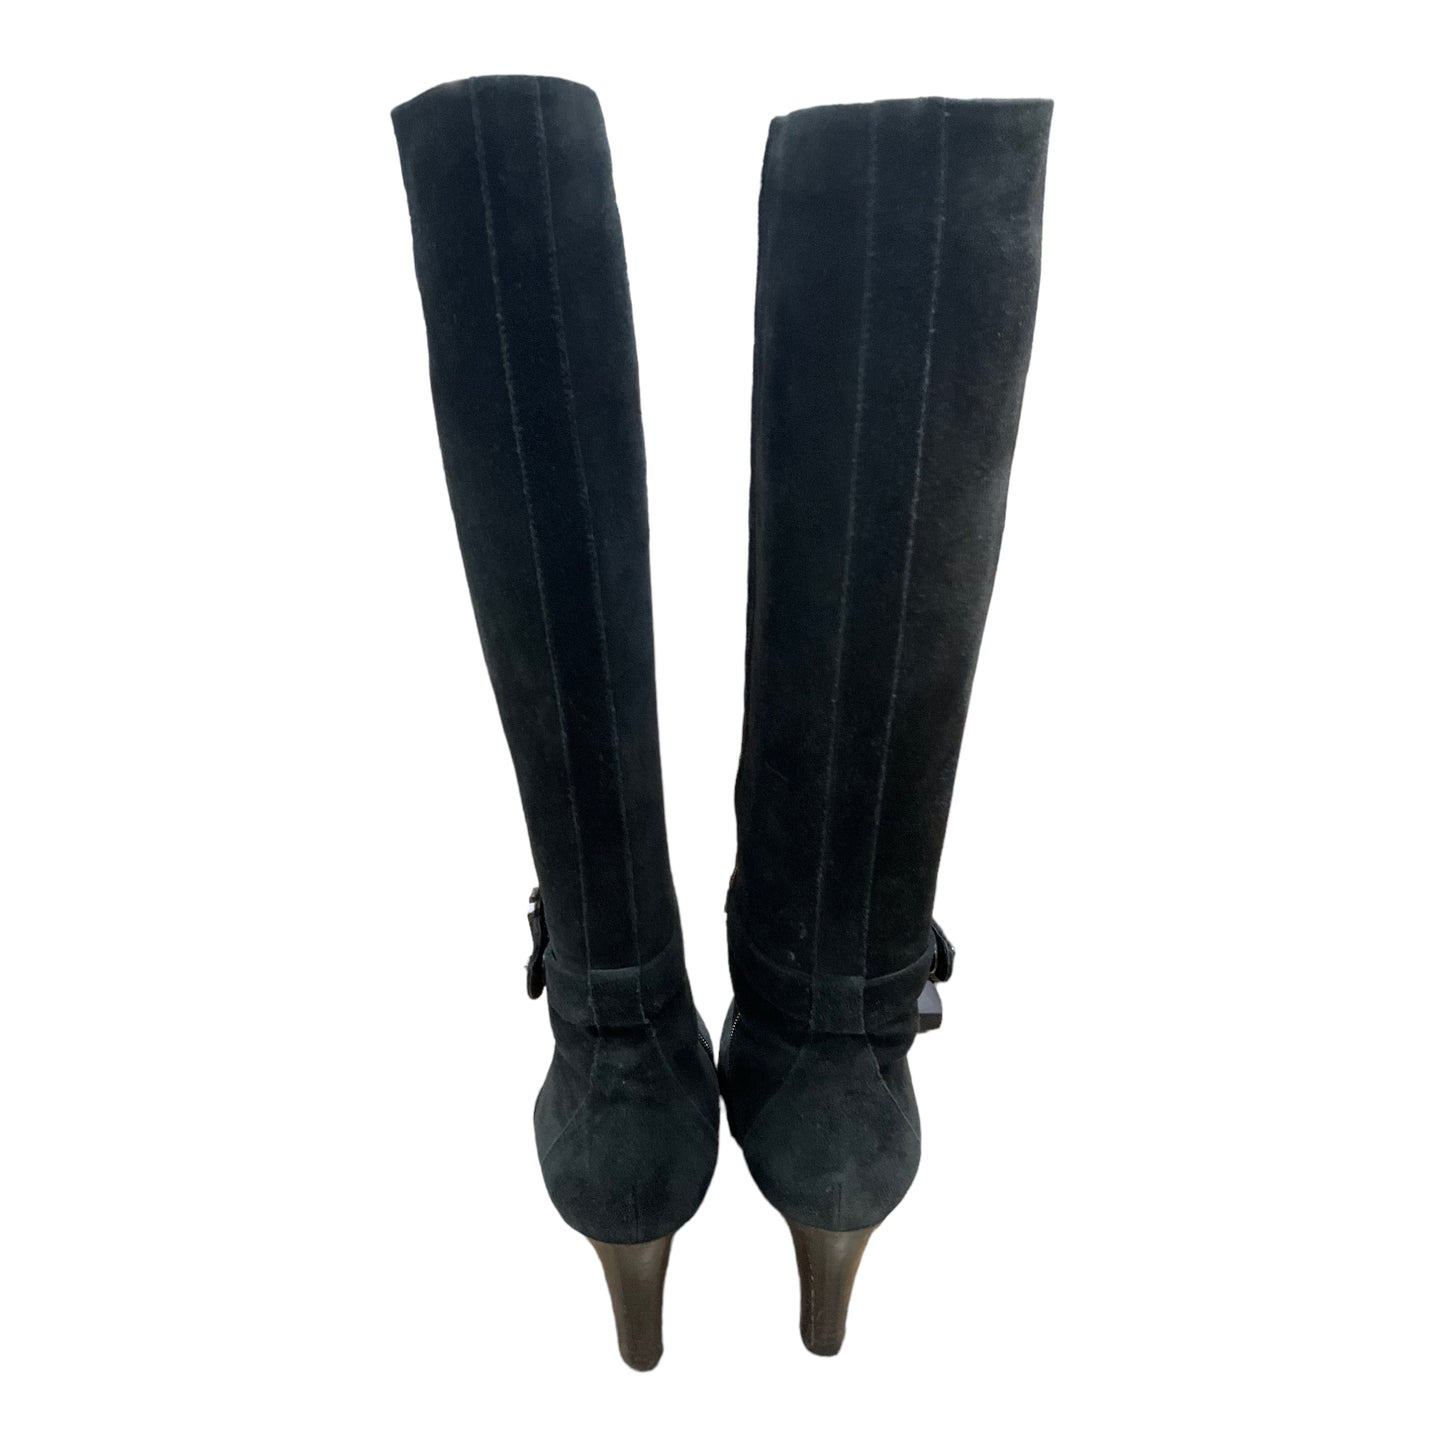 Boots Knee Heels By Aquatalia  Size: 8.5